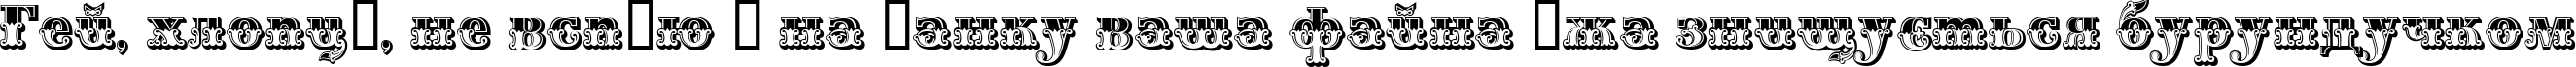 Пример написания шрифтом Monti-Decor B текста на украинском